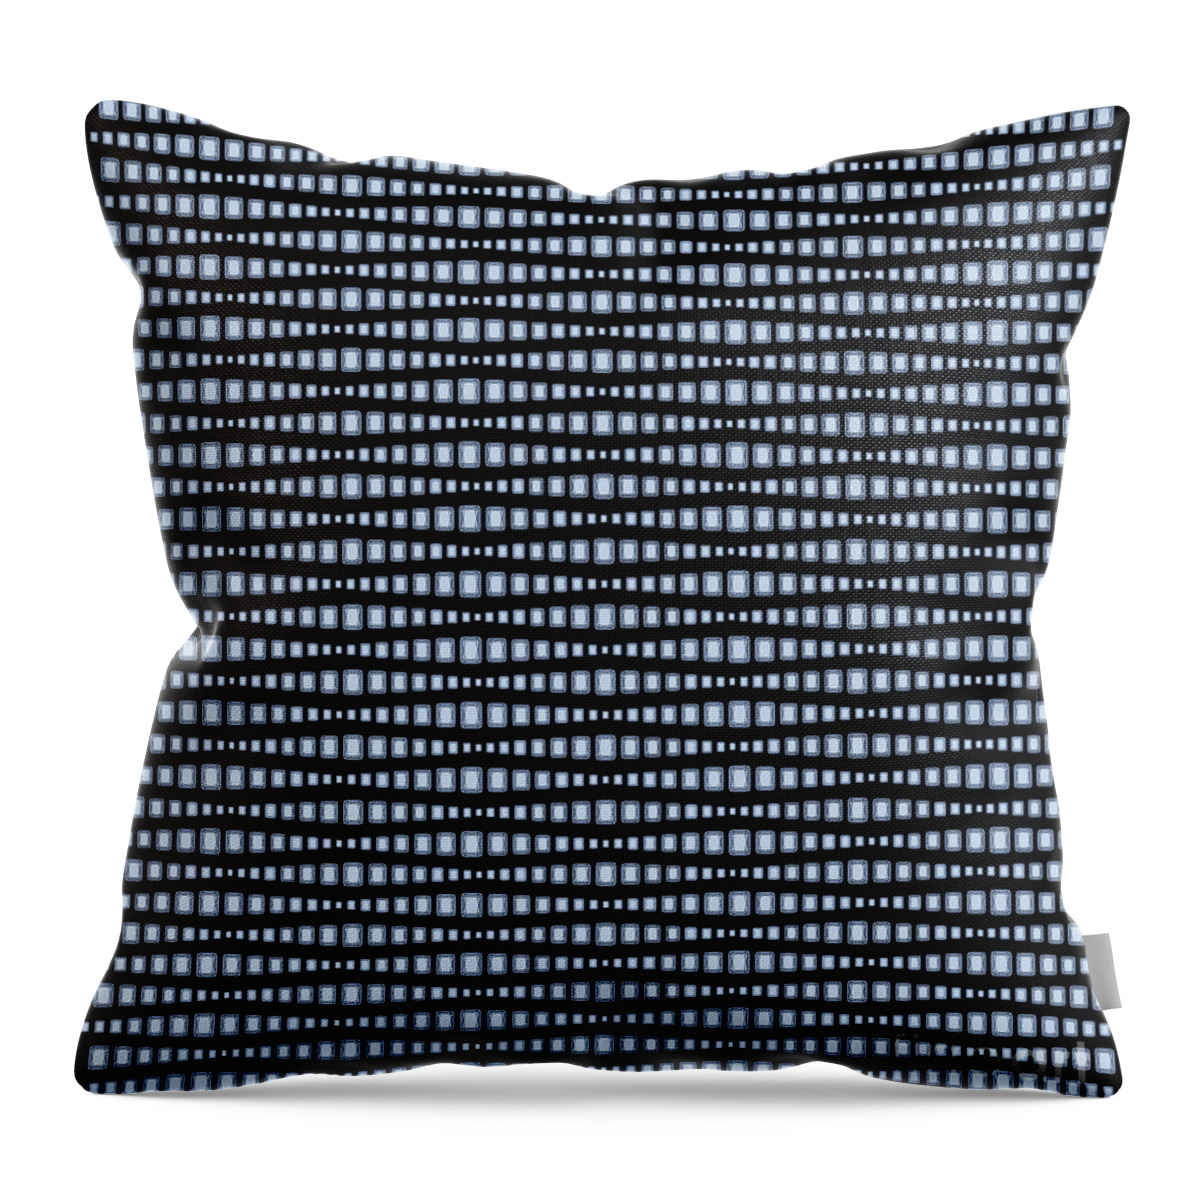 Brilliant Throw Pillow featuring the digital art Brilliant Diamond Pattern by Heather Schaefer